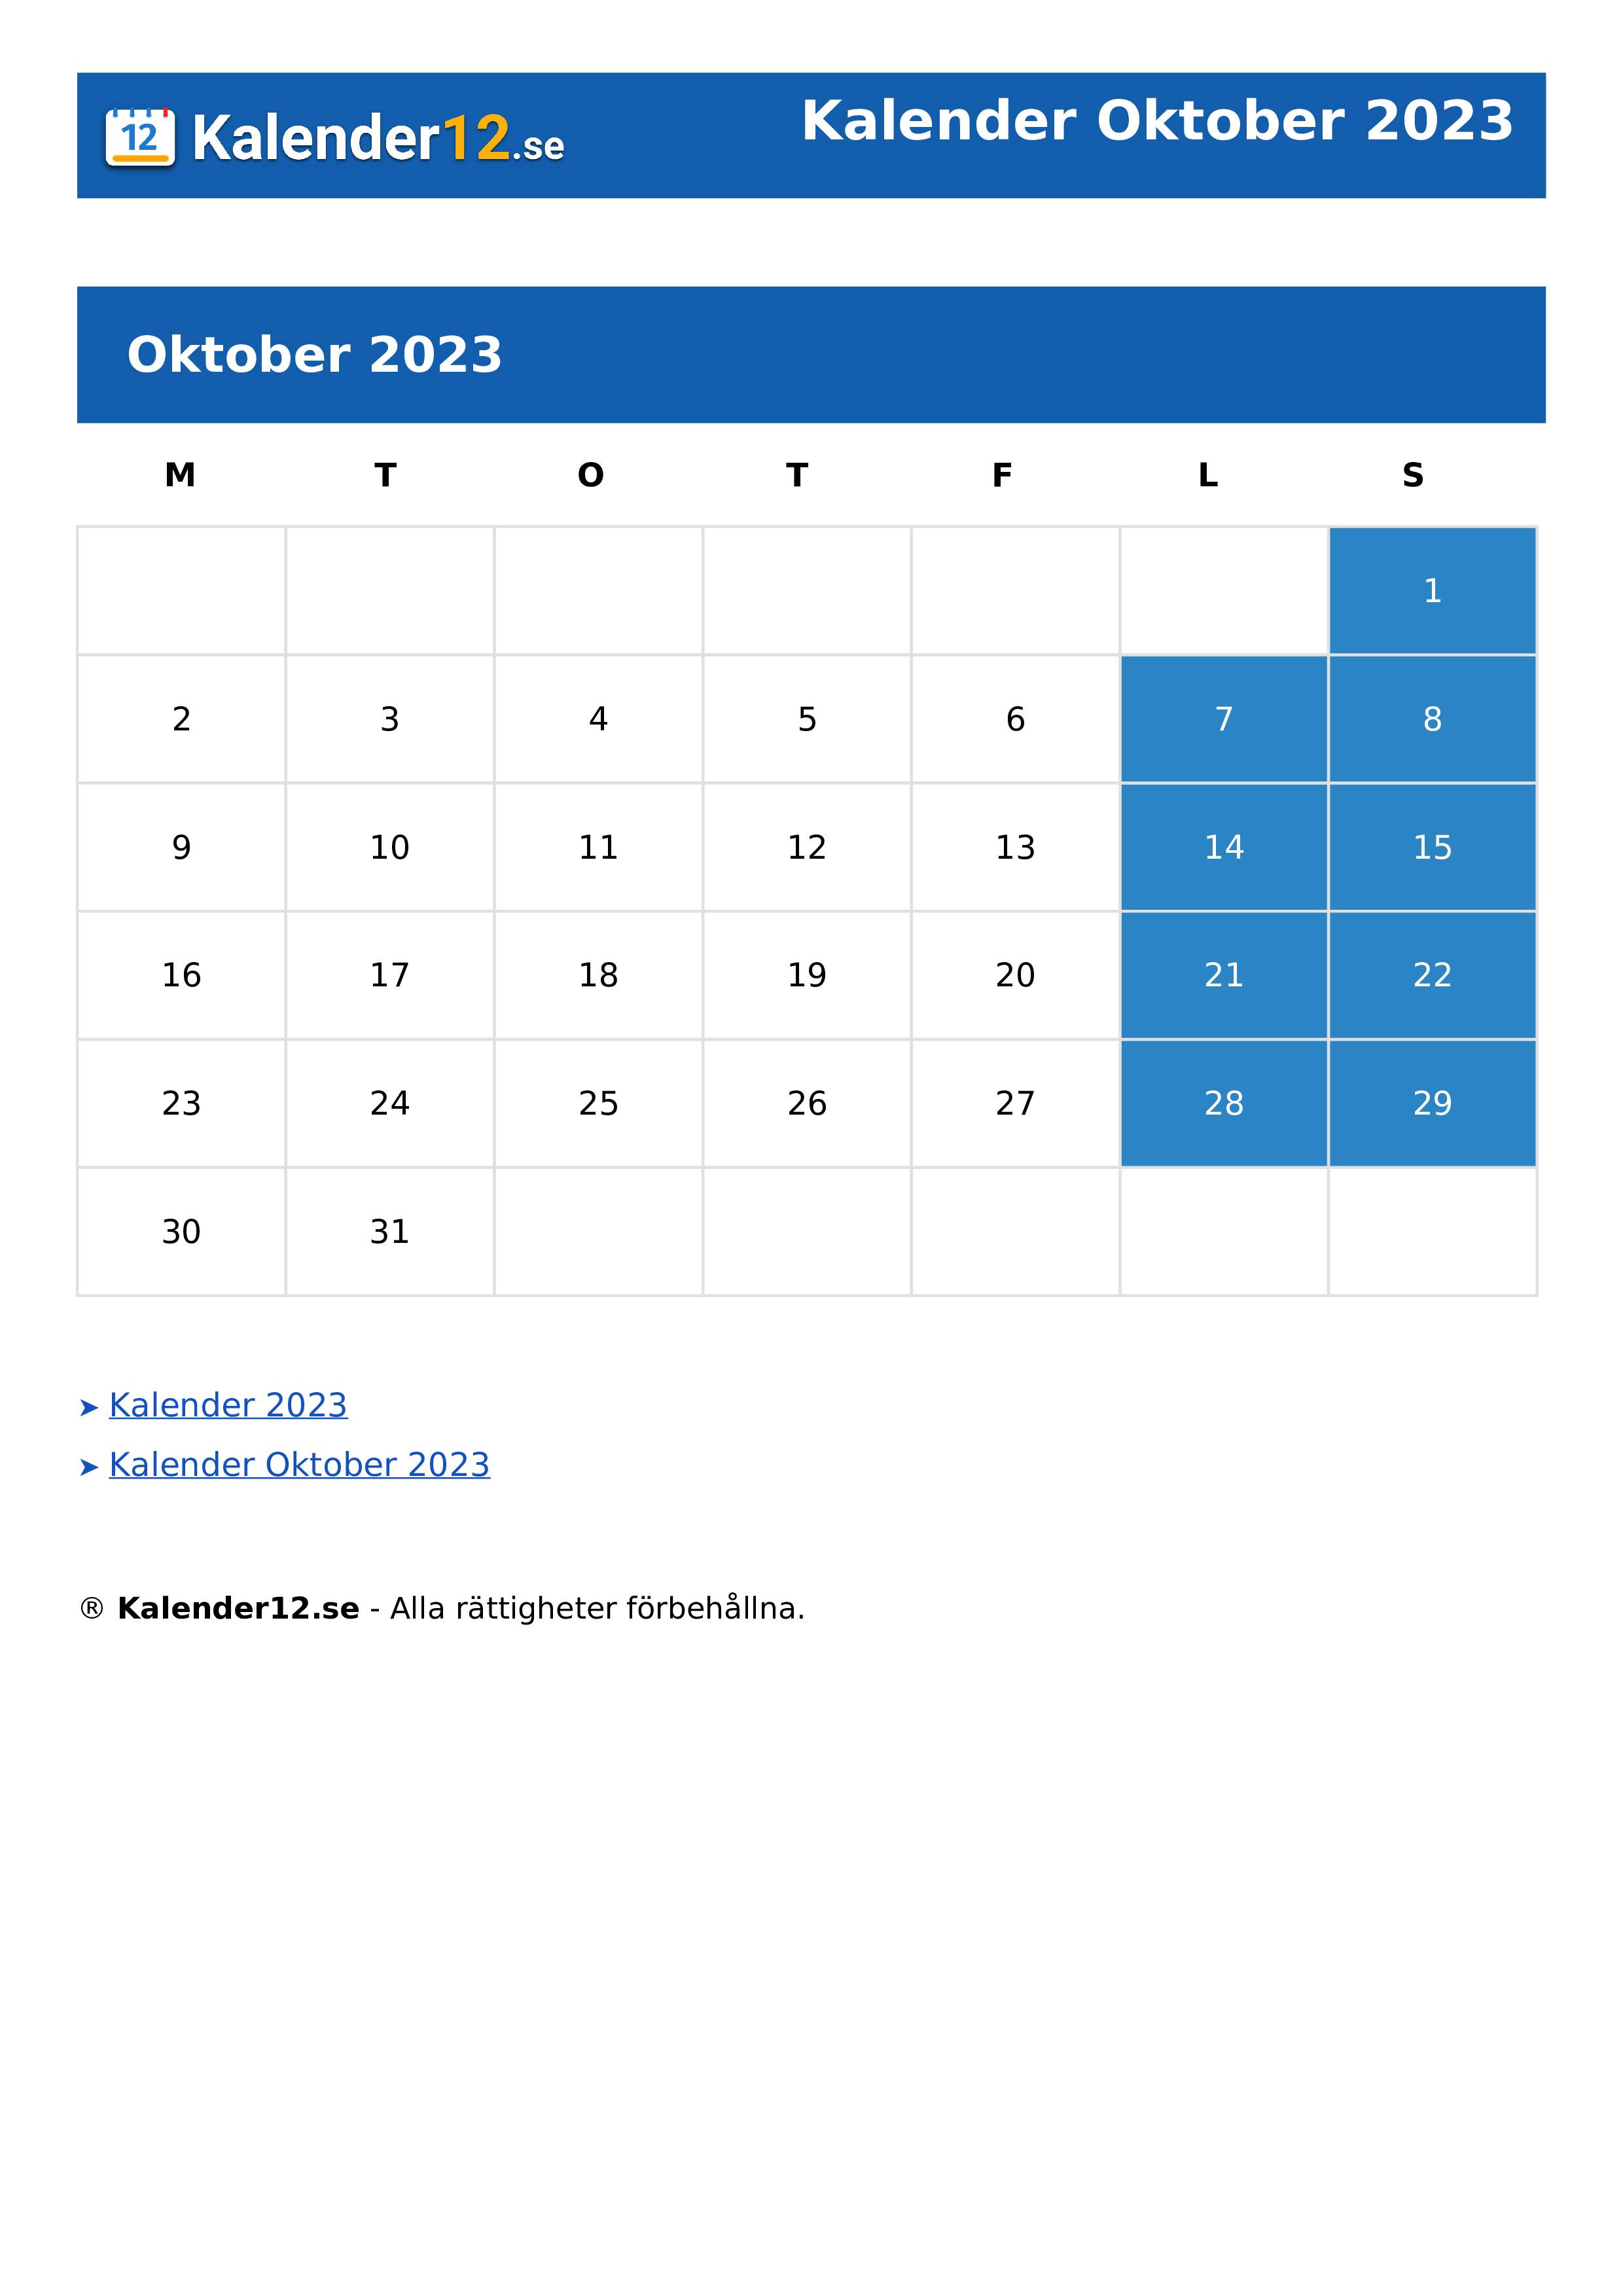 Calendar Oktober 2023